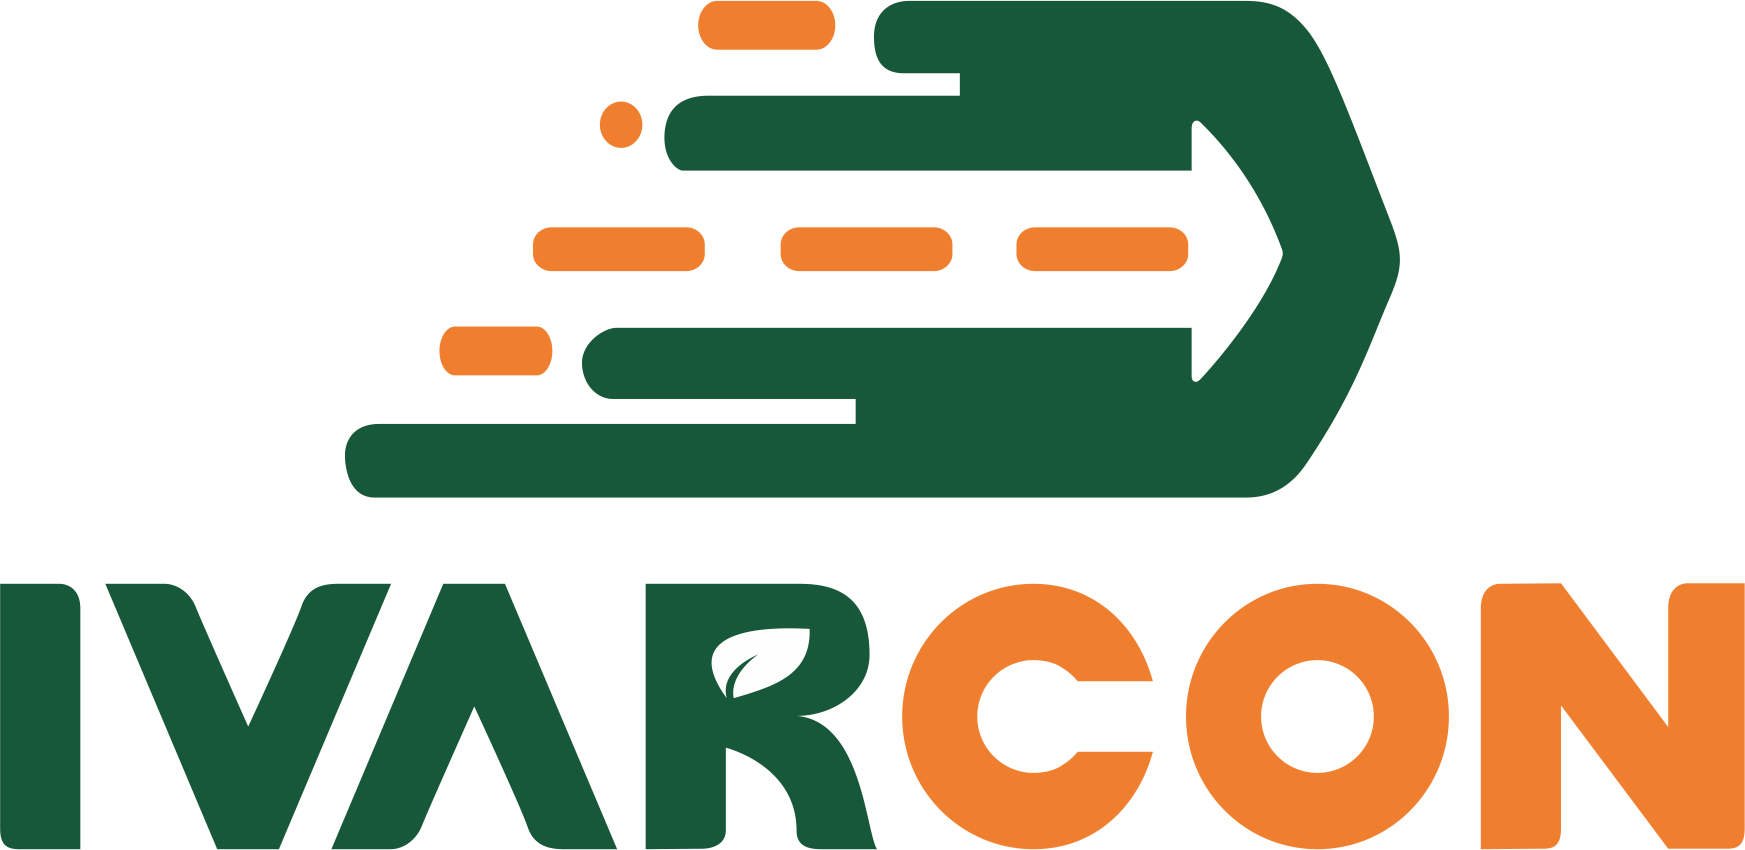 ivarcon logo